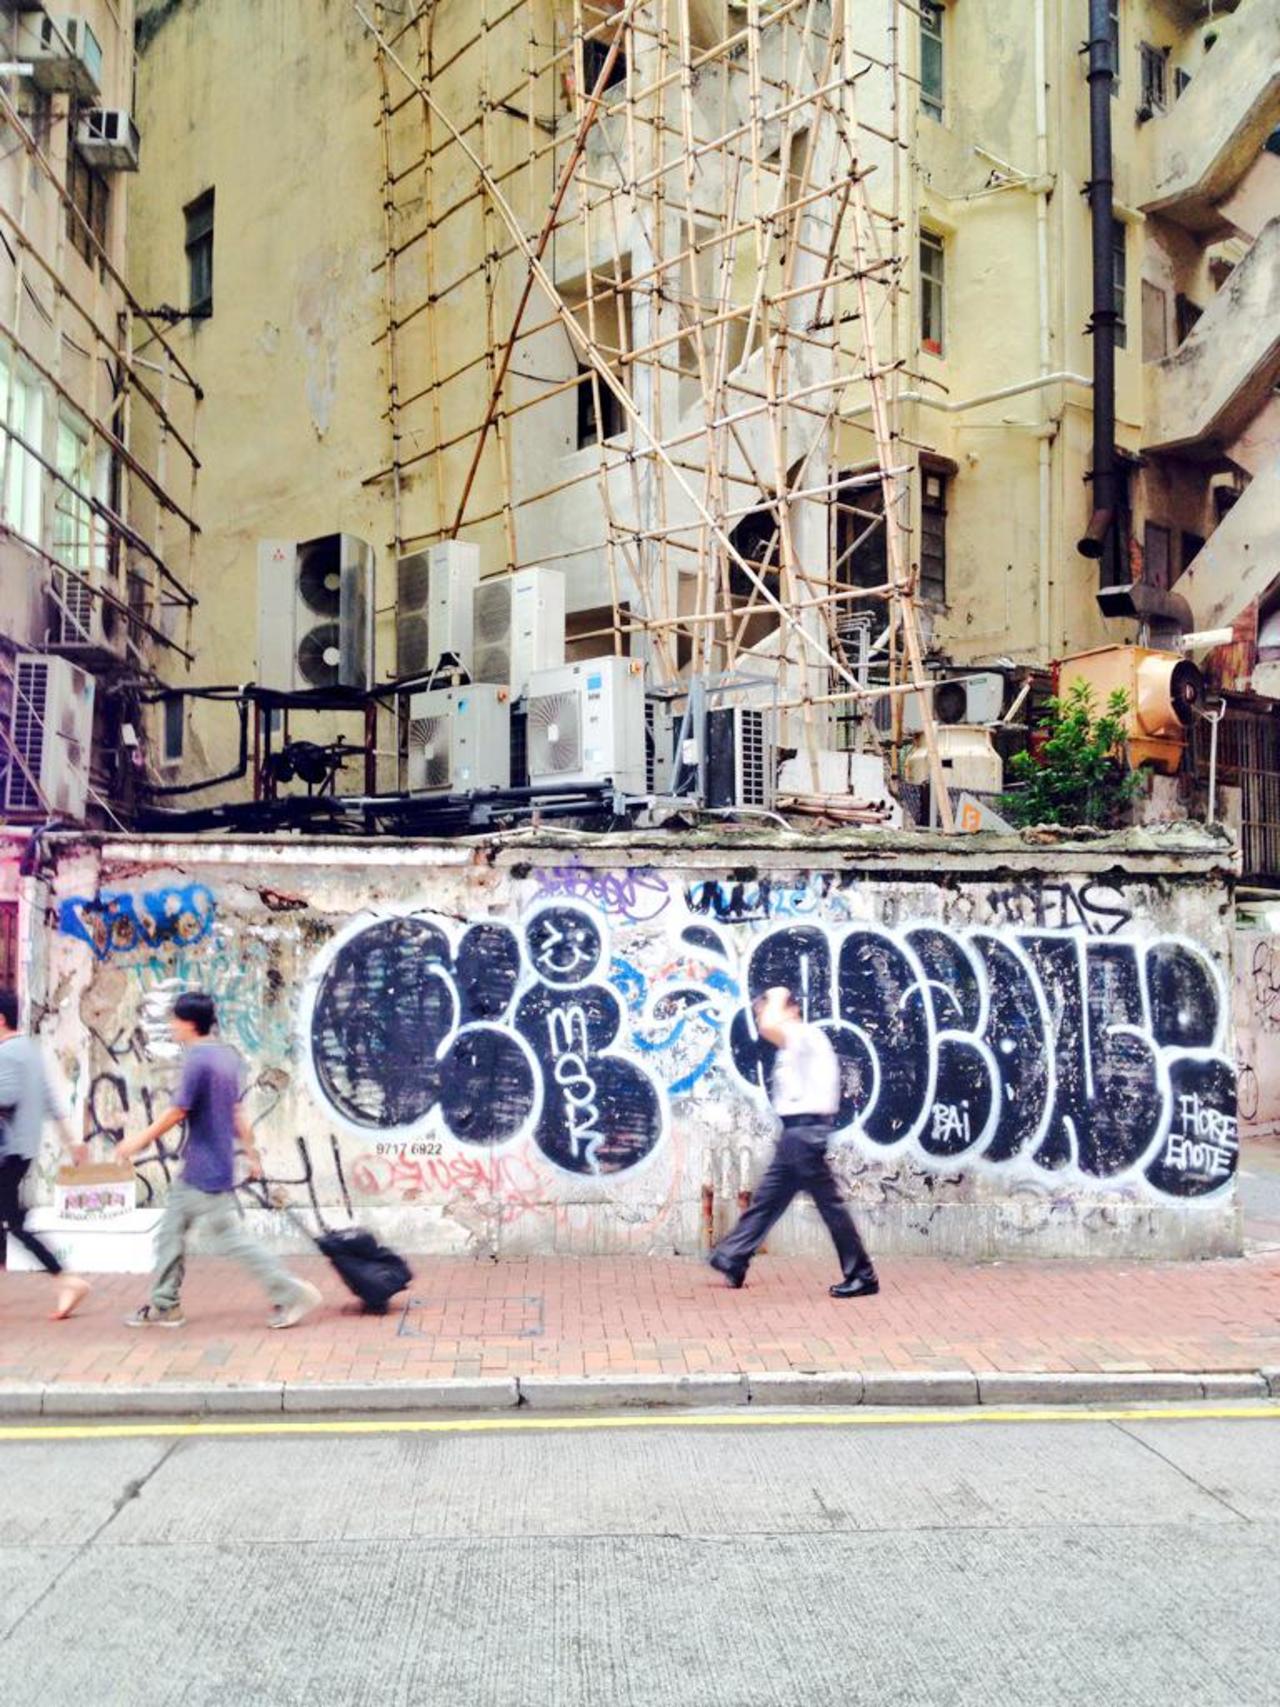 Man scratches head / drags bag
#streetart #streetphotography #graffiti #bigwalls #HongKong #streetphoto #poximity http://t.co/H4uBMX6KZB